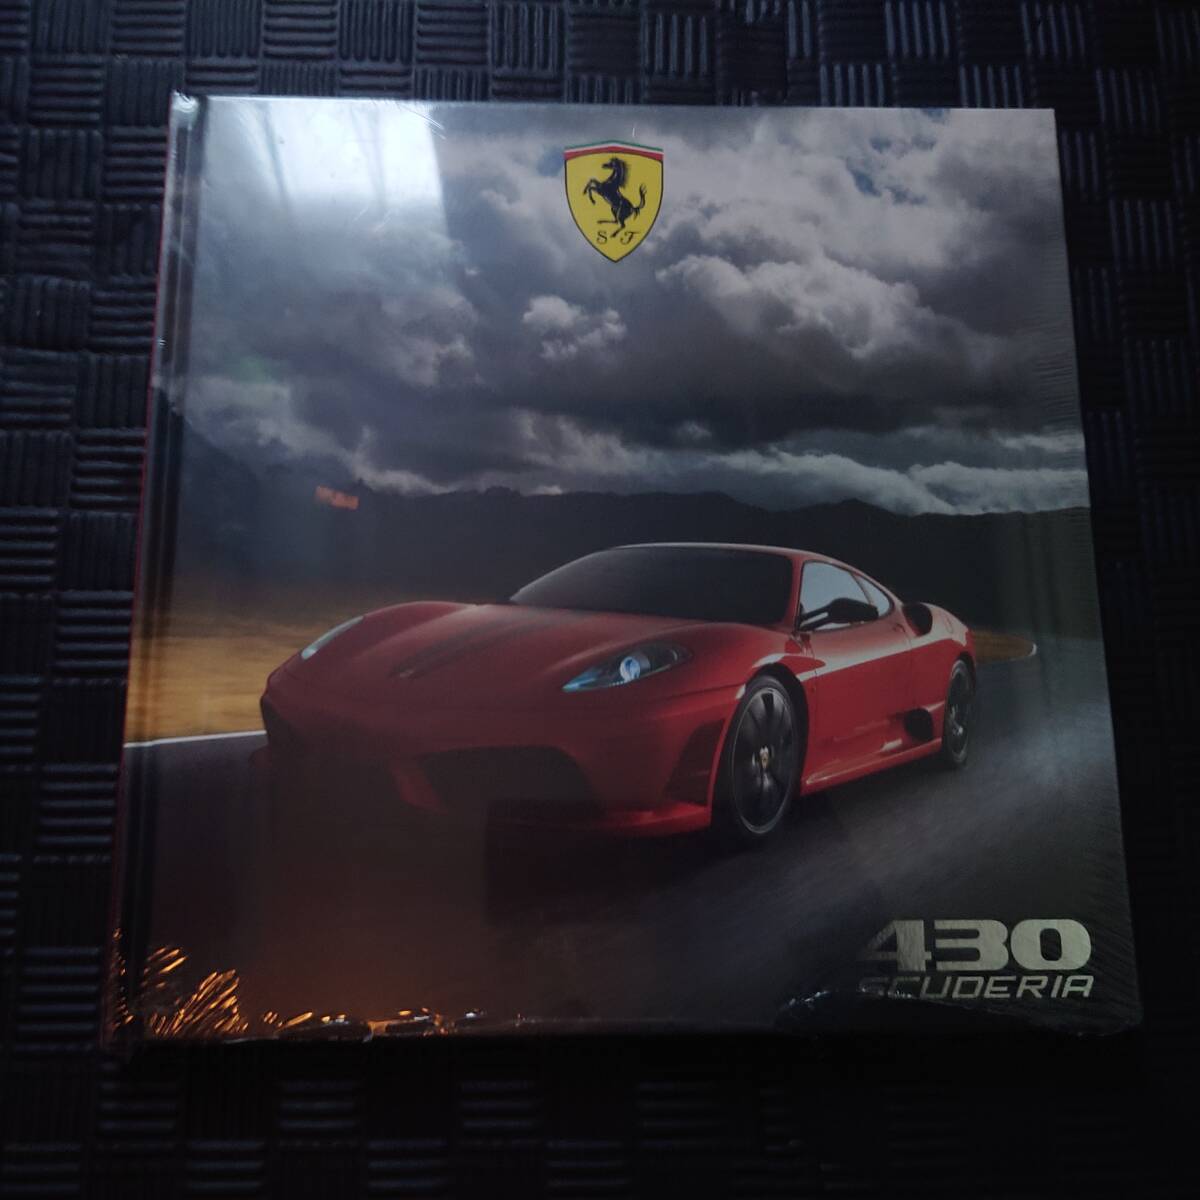 Ferrari 430 SCUDERIA 未開封ハードカバーカタログの画像1